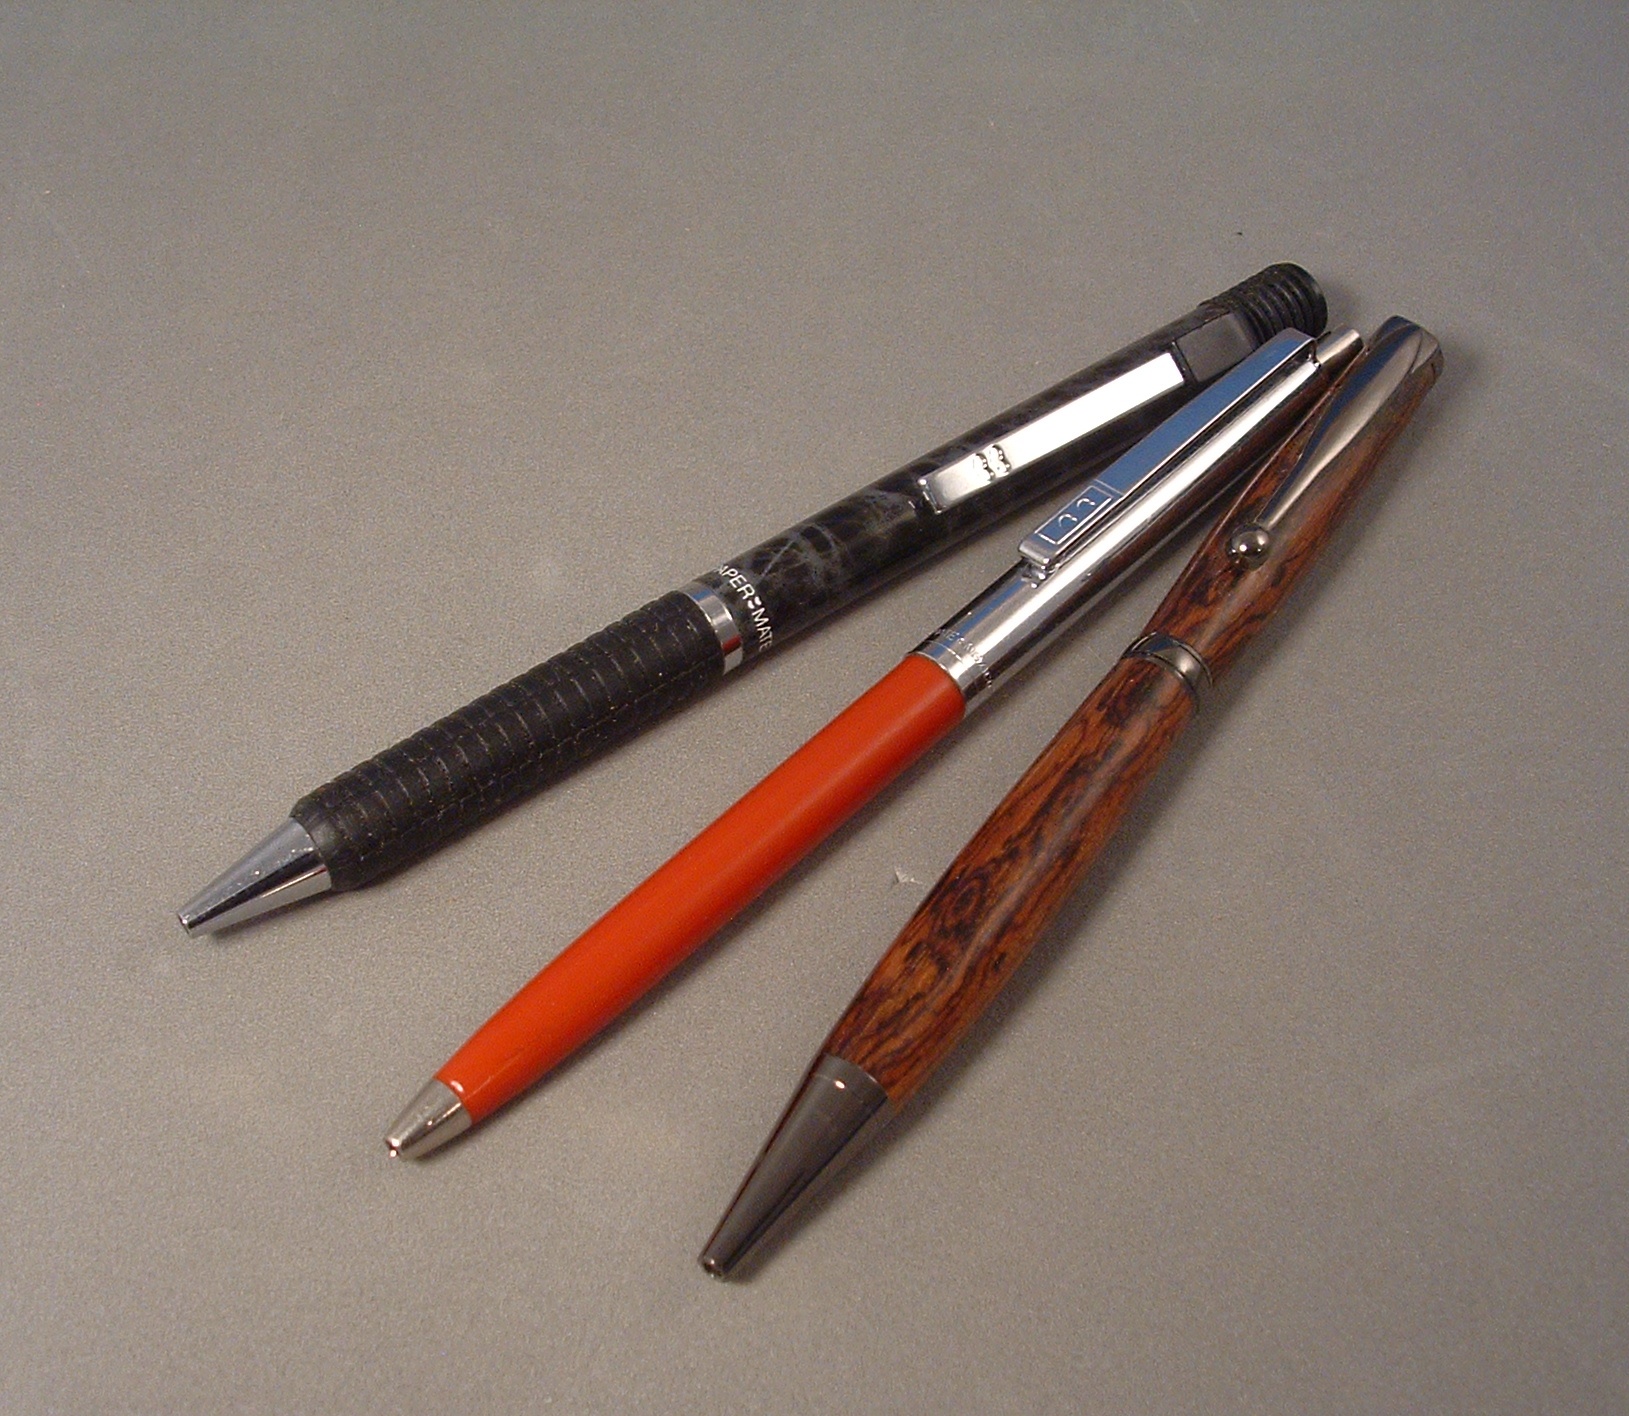 Slim pen examples